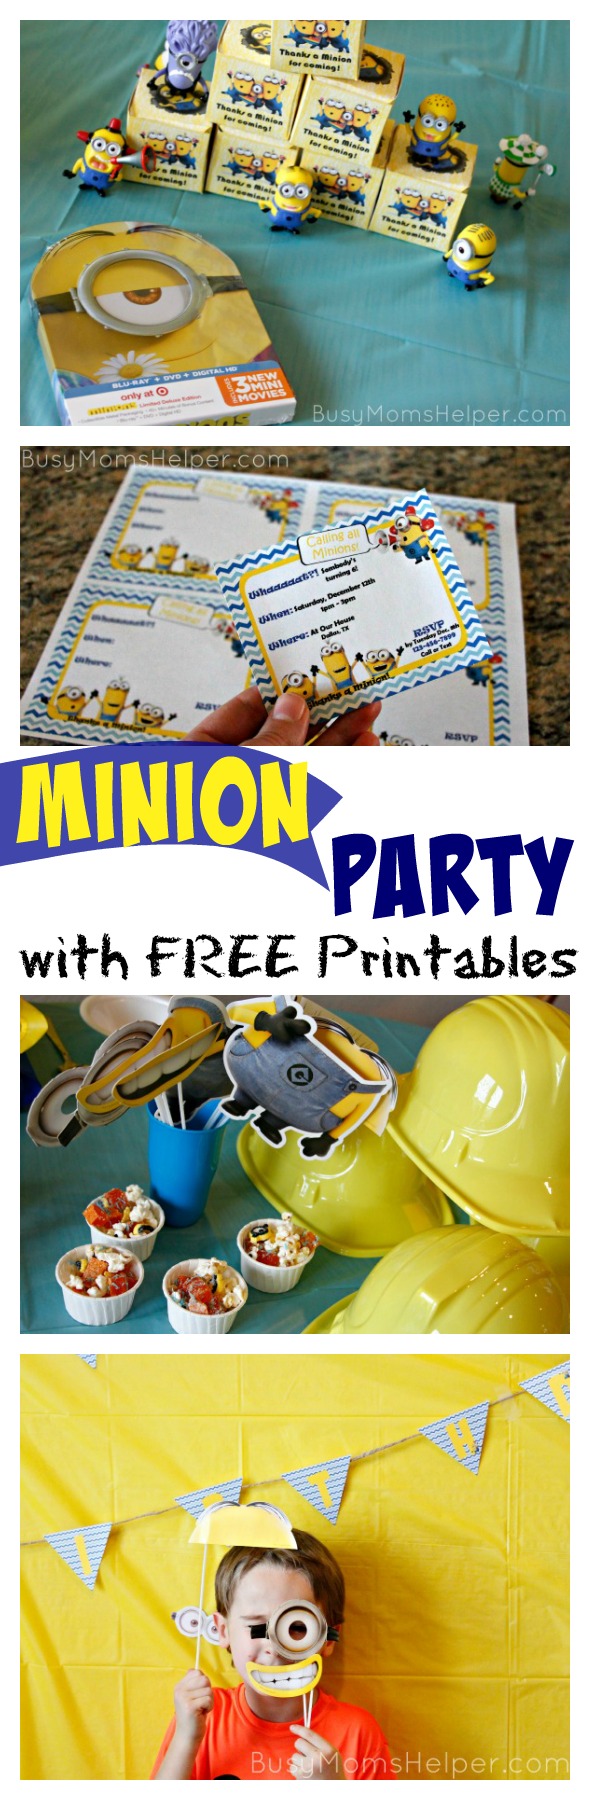 Minion Party with Free Printables / by BusyMomsHelper.com #MinionsMovieNight #ad